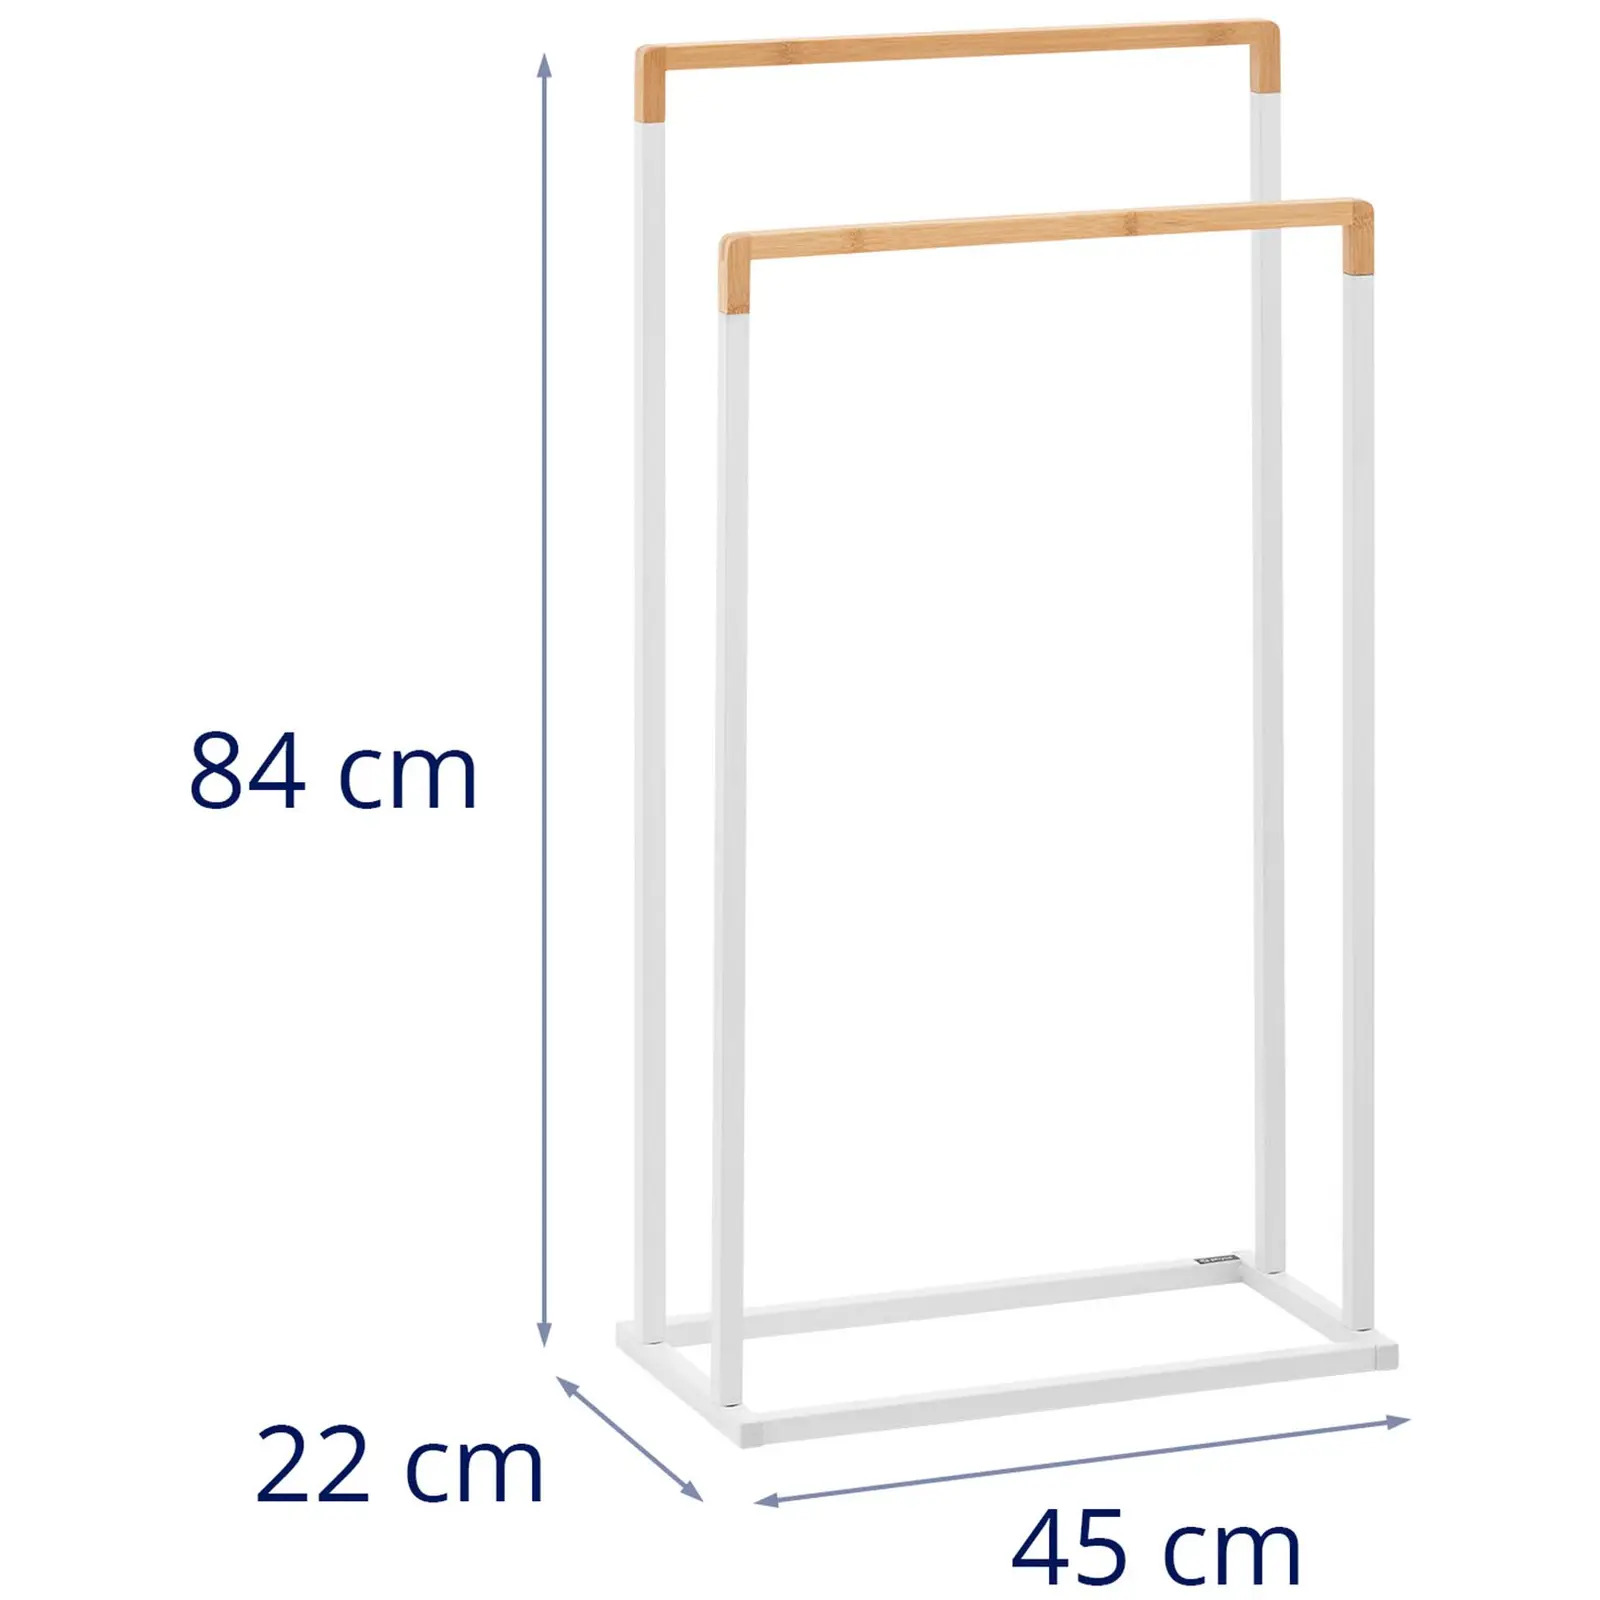 Towel Rail - 2 Bars - Bamboo/White